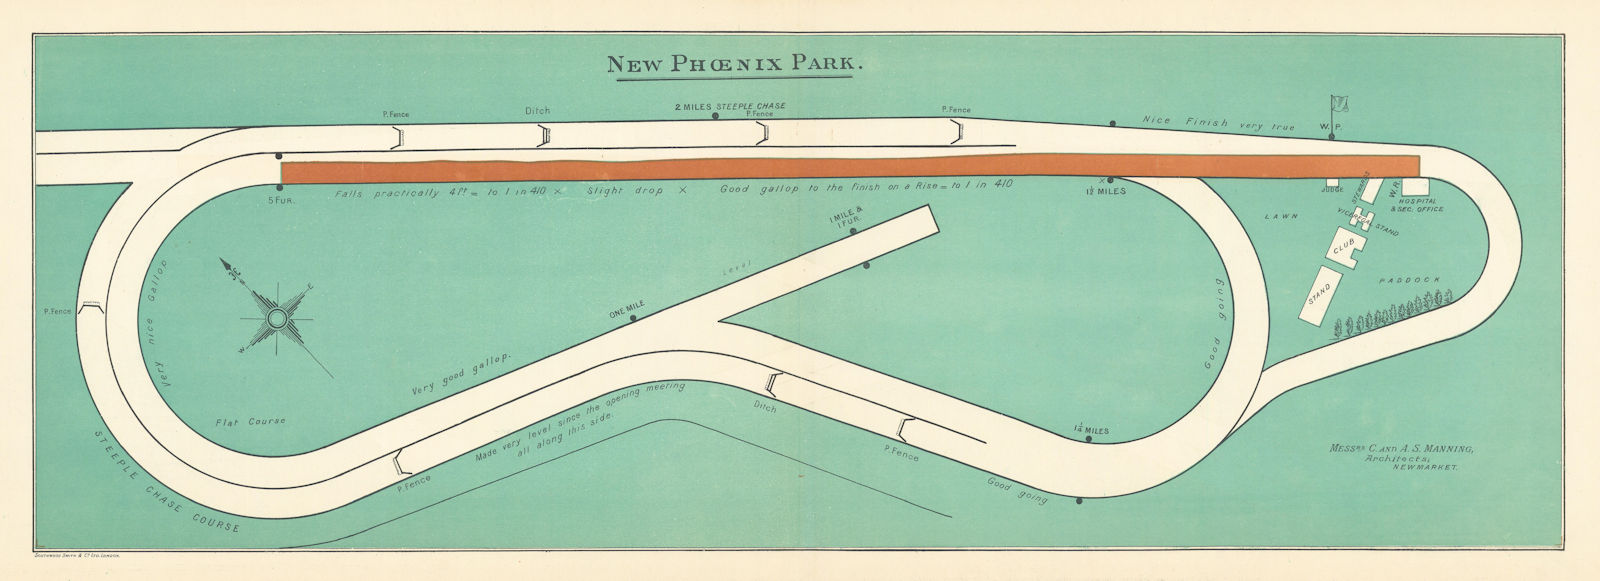 New Phoenix Park racecourse, Ireland. Closed 1990. BAYLES 1903 old antique map